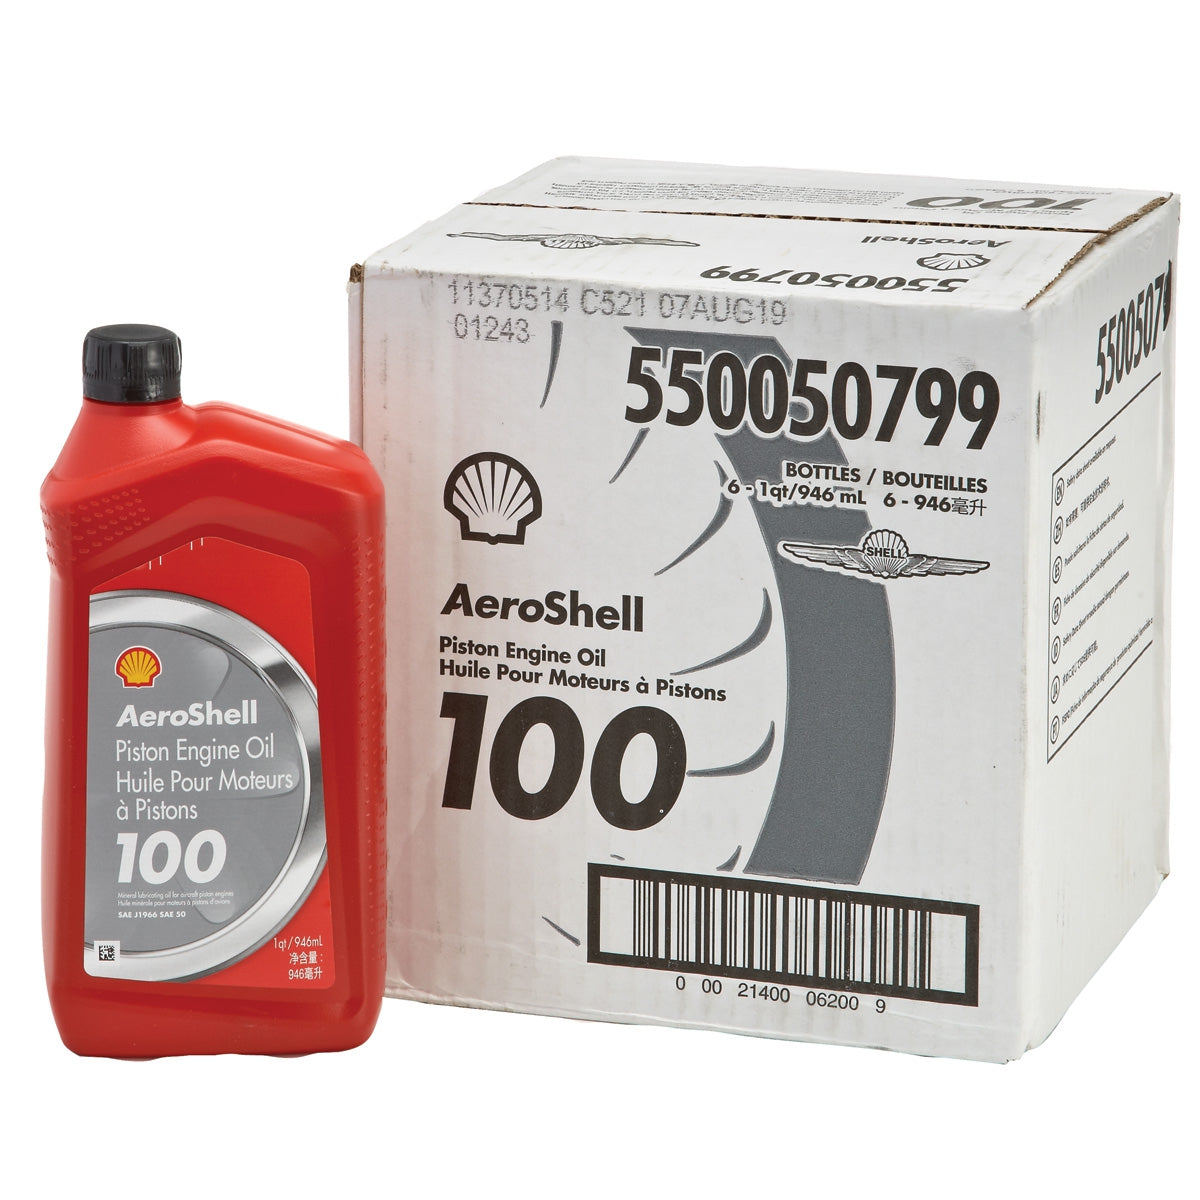 Aeroshell 100 Piston Engine Oil - 6 x 1 QT Carton